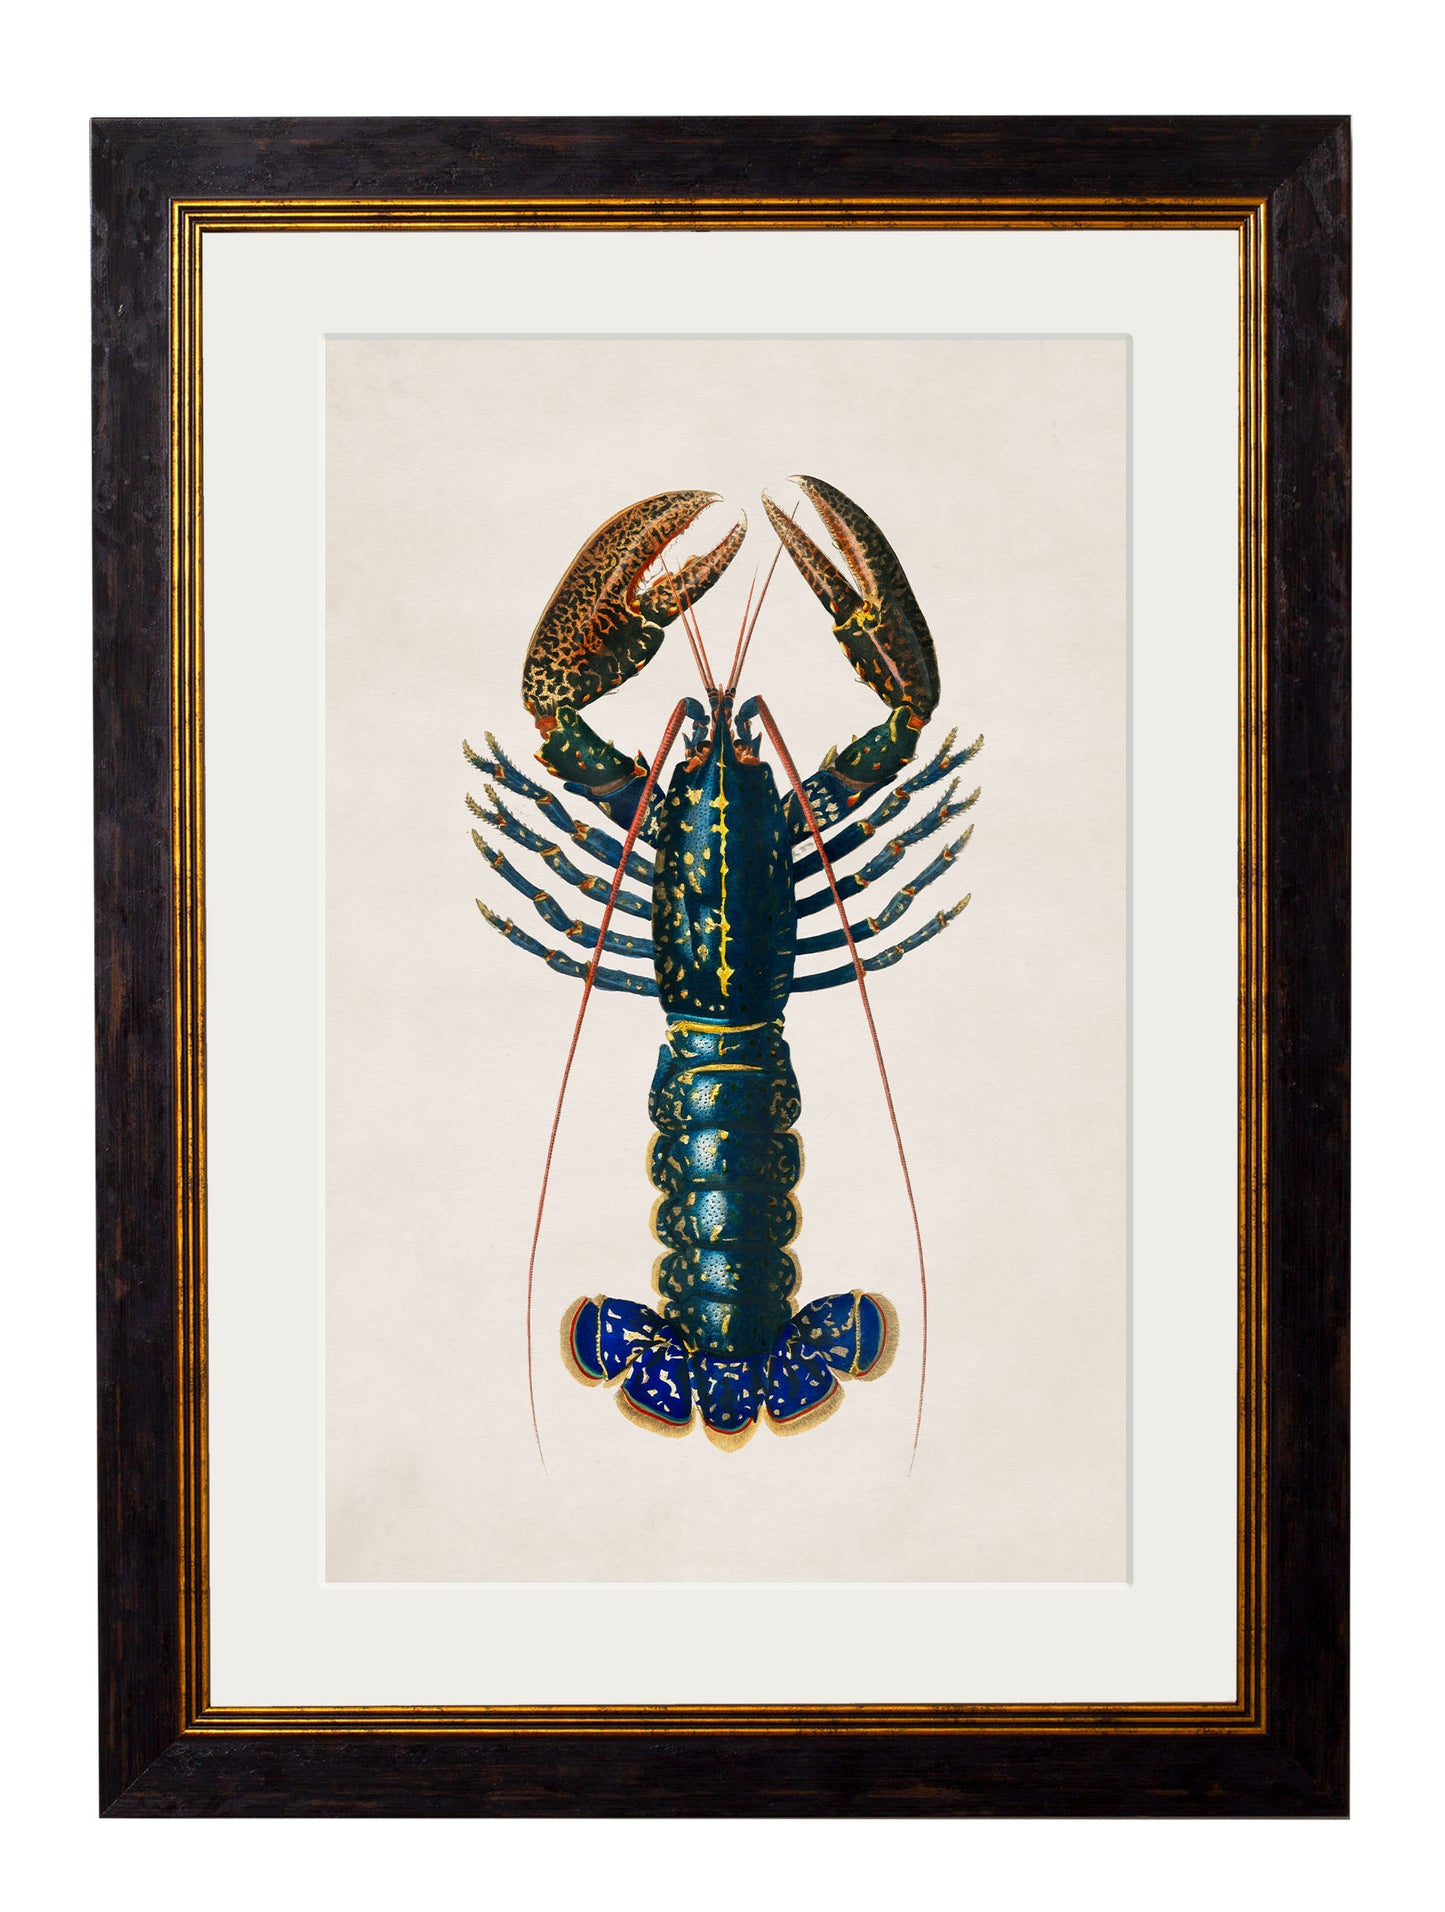 Framed Crayfish Print